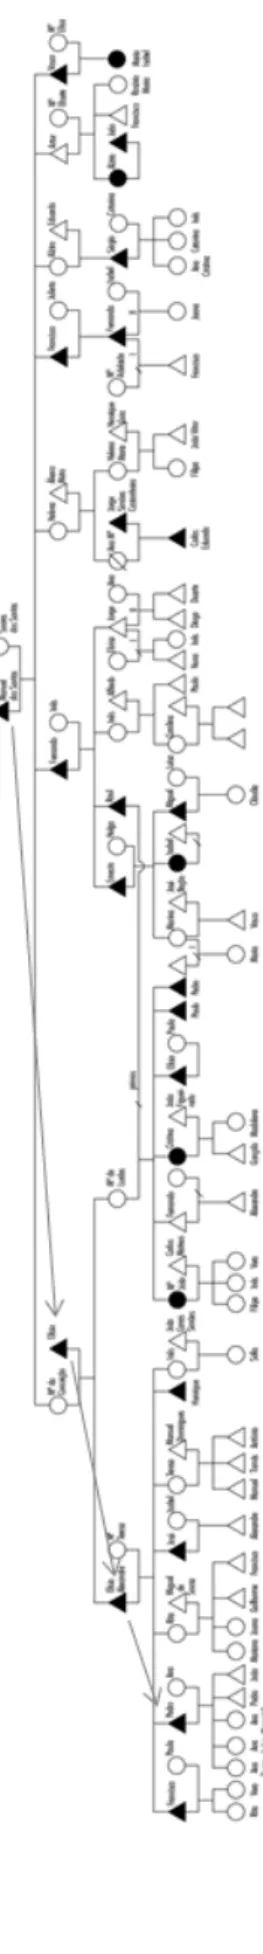 Figure 5 The Dos Santos' Family Tree 